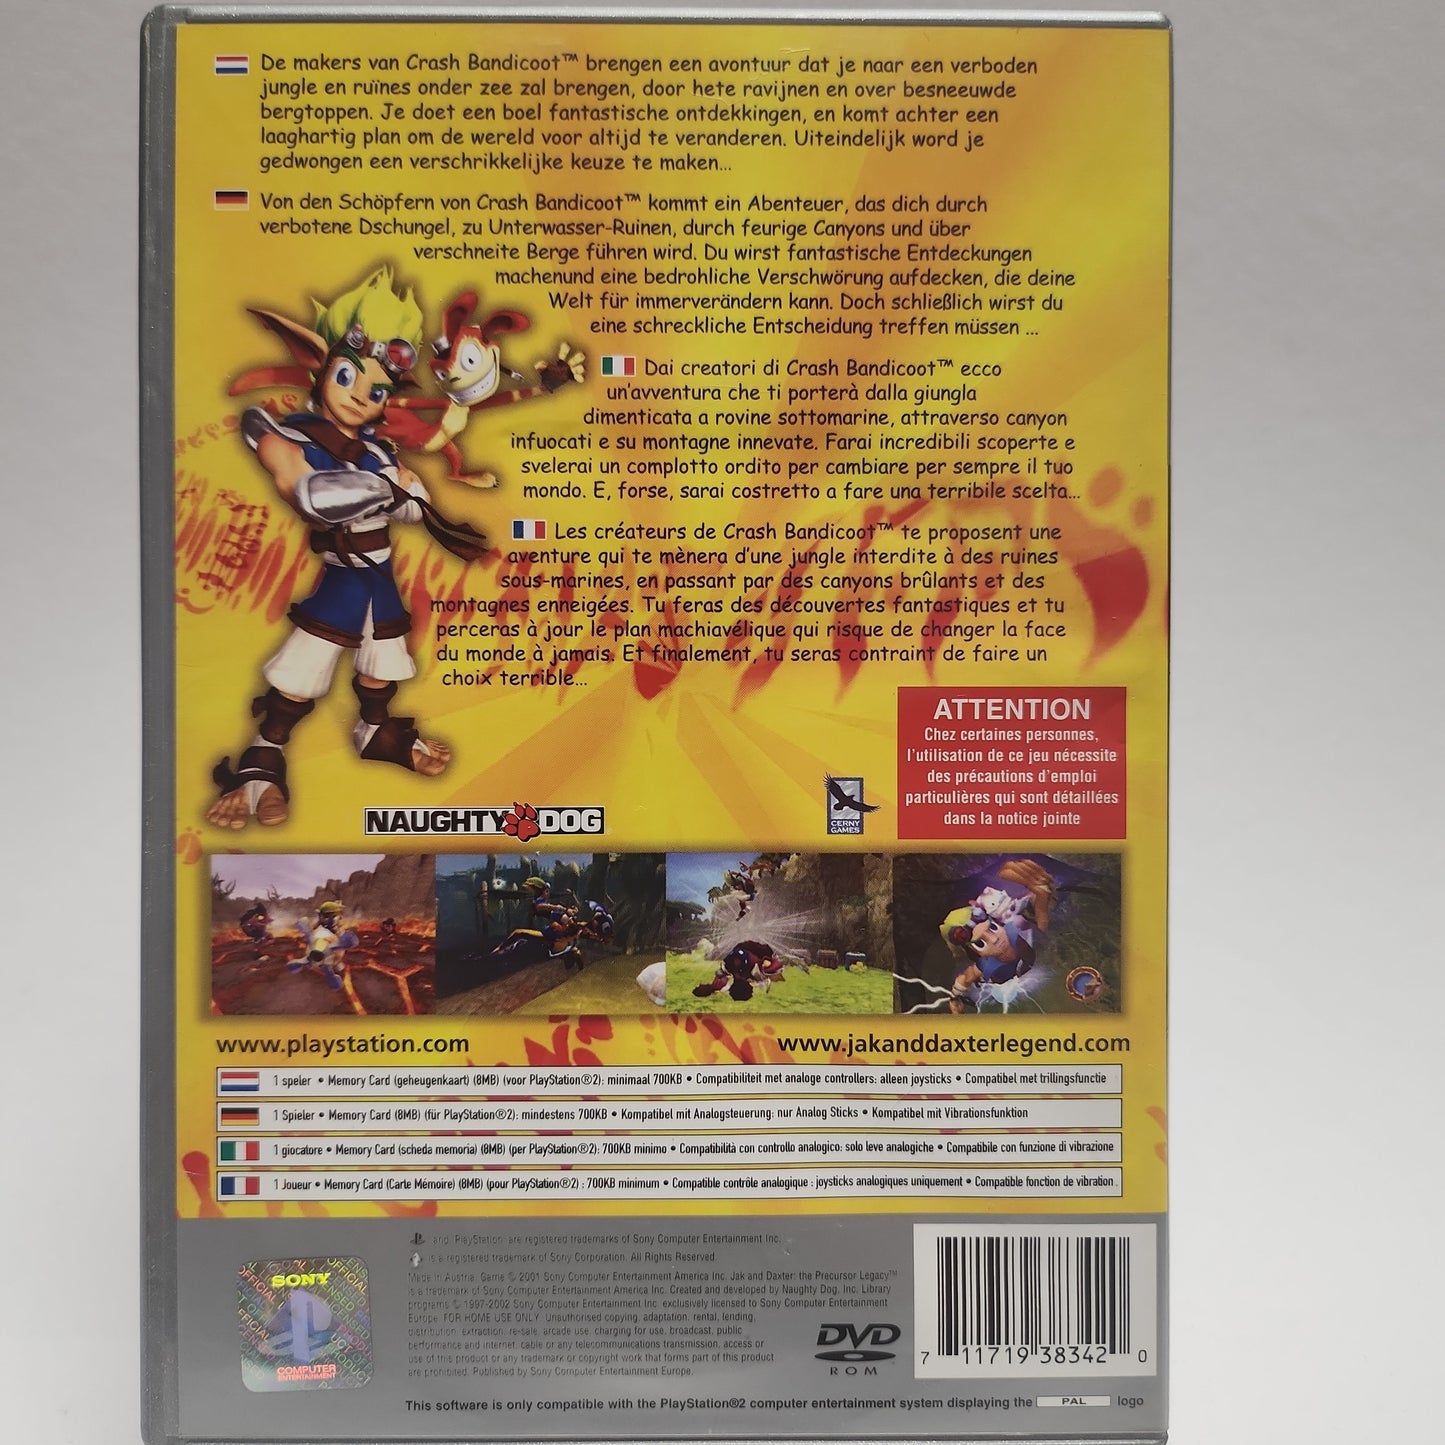 Jak and Daxter: the Precursor Legacy Platinum PS2